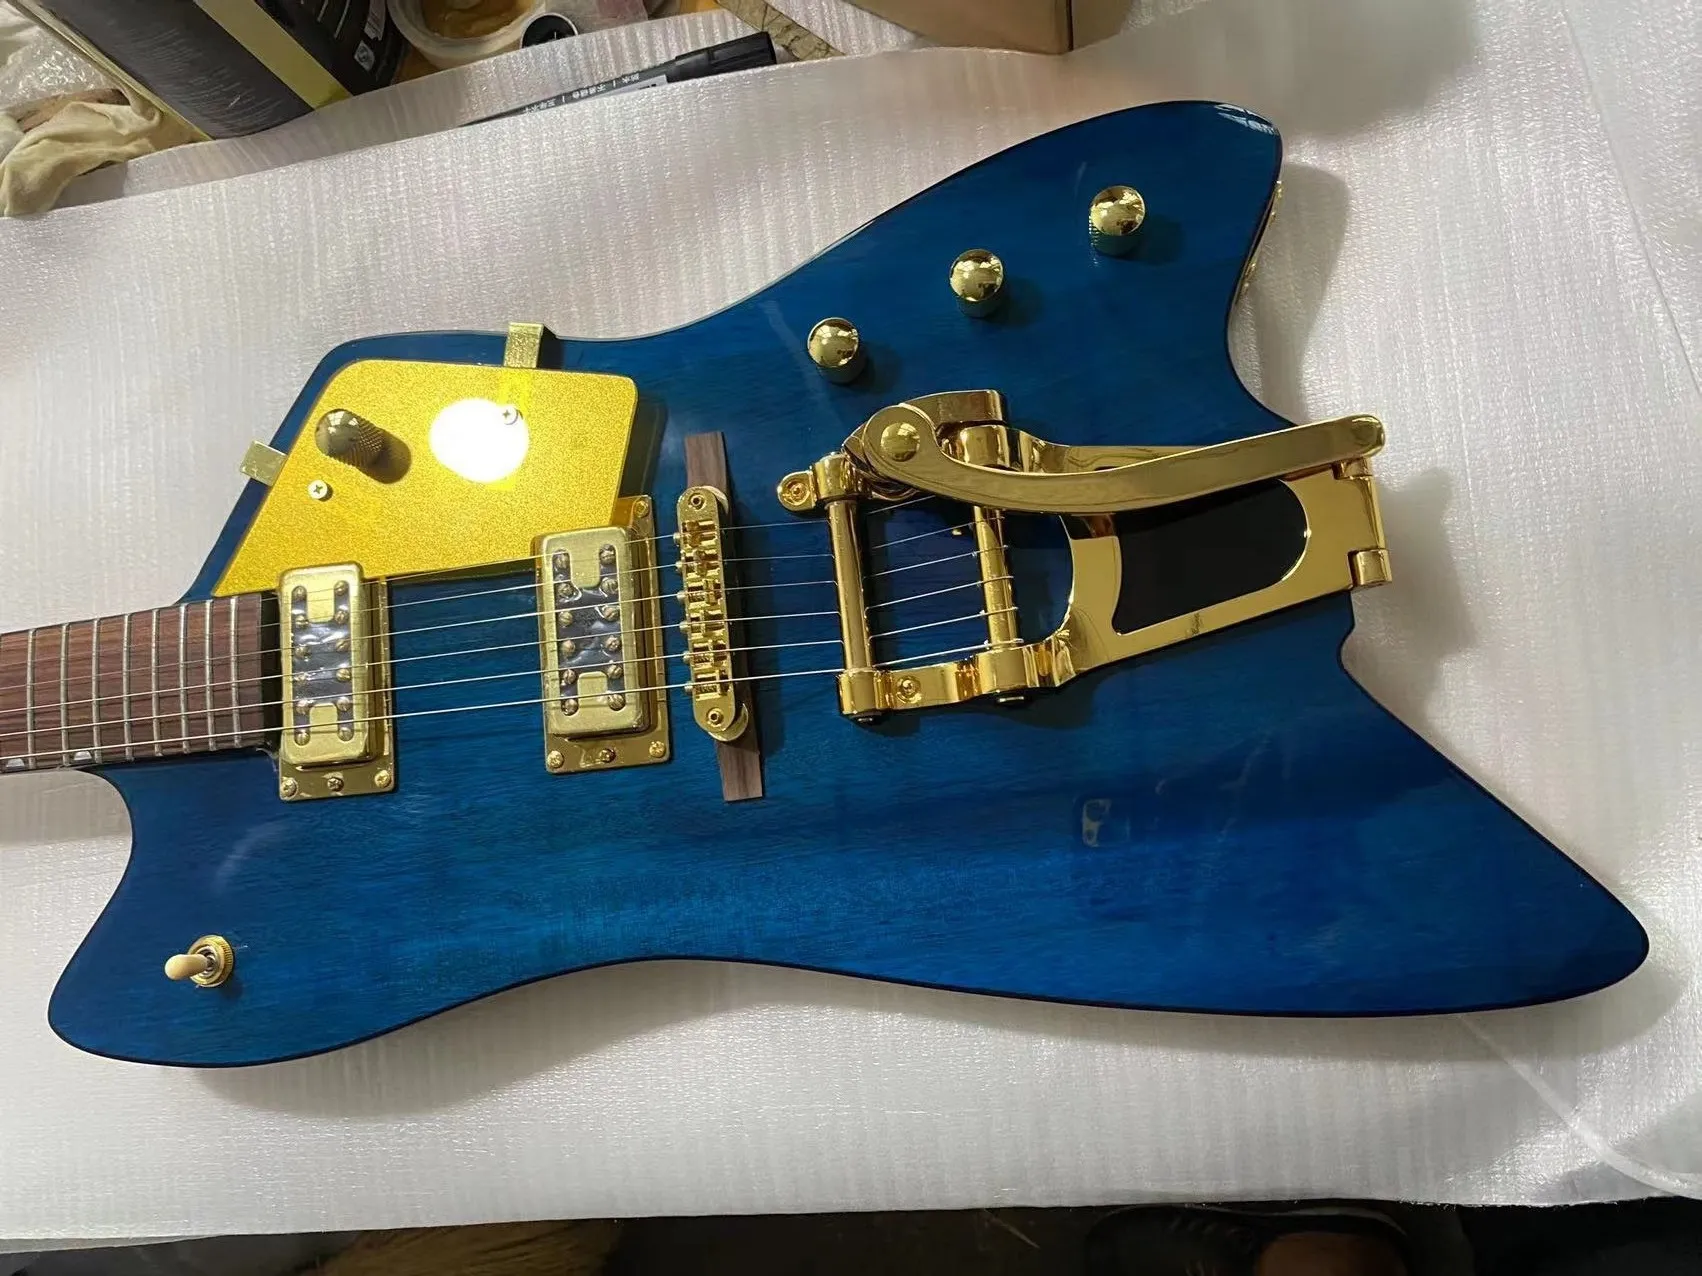 Custom 6199 Billy Bo Jupiter Blue Thunderbird Electric Guitar Black Body Binding Bigs Tremolo Bridge Gold Hardware Sparkle Gold Pickugard